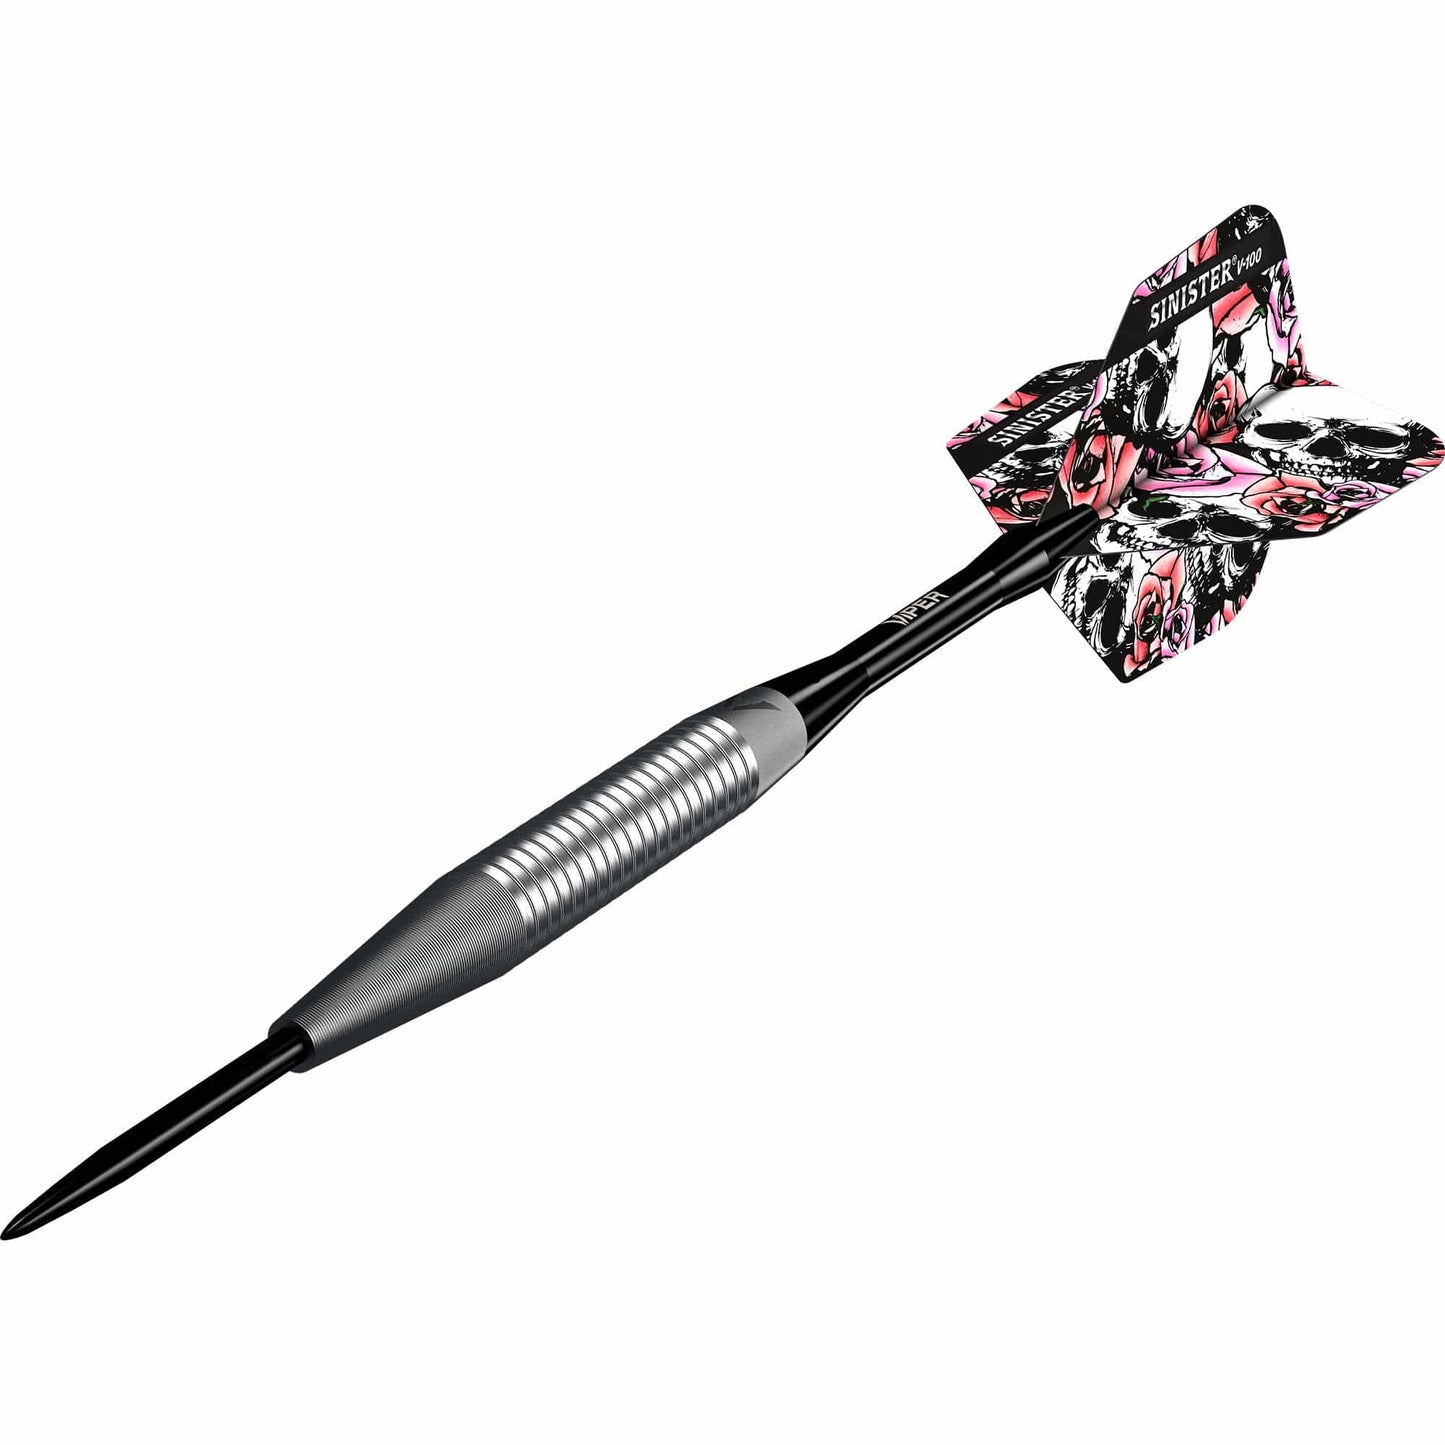 Viper Sinister Darts - Steel Tip - 90% - Sandblasted - S1 - Shark Grip